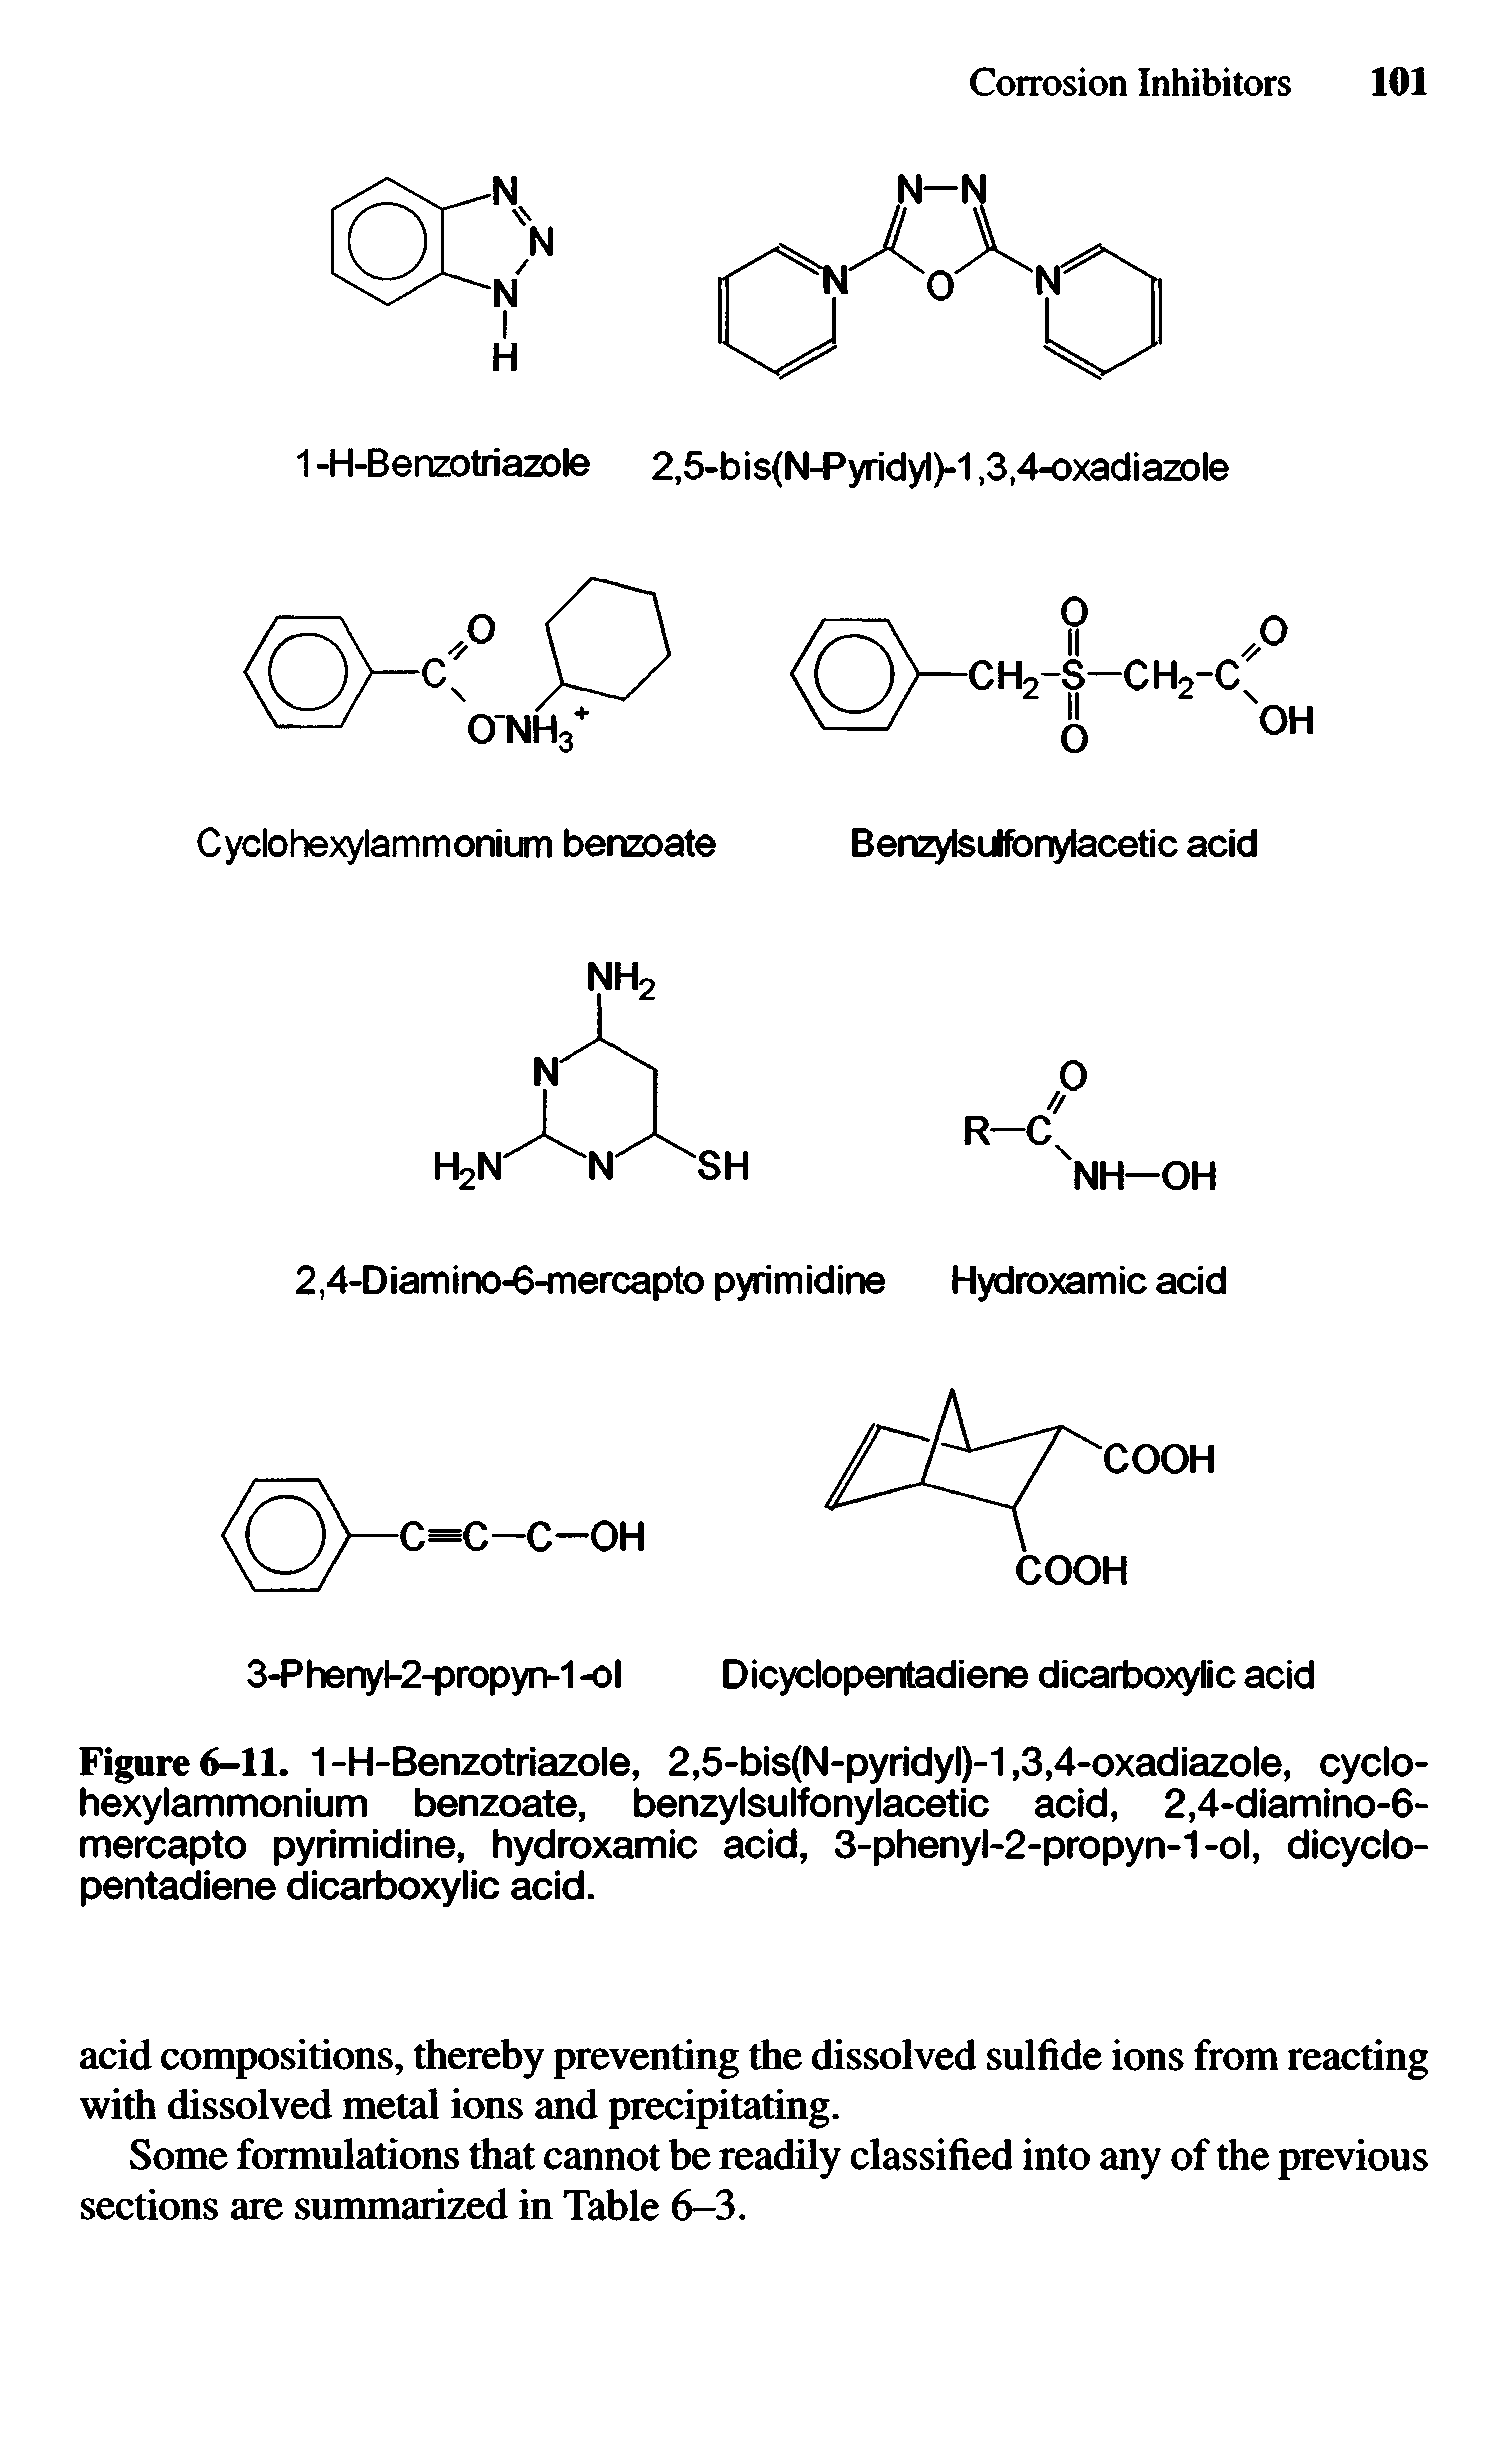 Figure 6-11. 1 -H-Benzotriazole, 2,5-bis(N-pyridyl)-1,3,4-oxadiazole, cyclohexylammonium benzoate, benzylsulfonylacetic acid, 2,4-diamino-6-mercapto pyrimidine, hydroxamic acid, 3-phenyl-2-propyn-1-ol, dicyclopentadiene dicarboxylic acid.